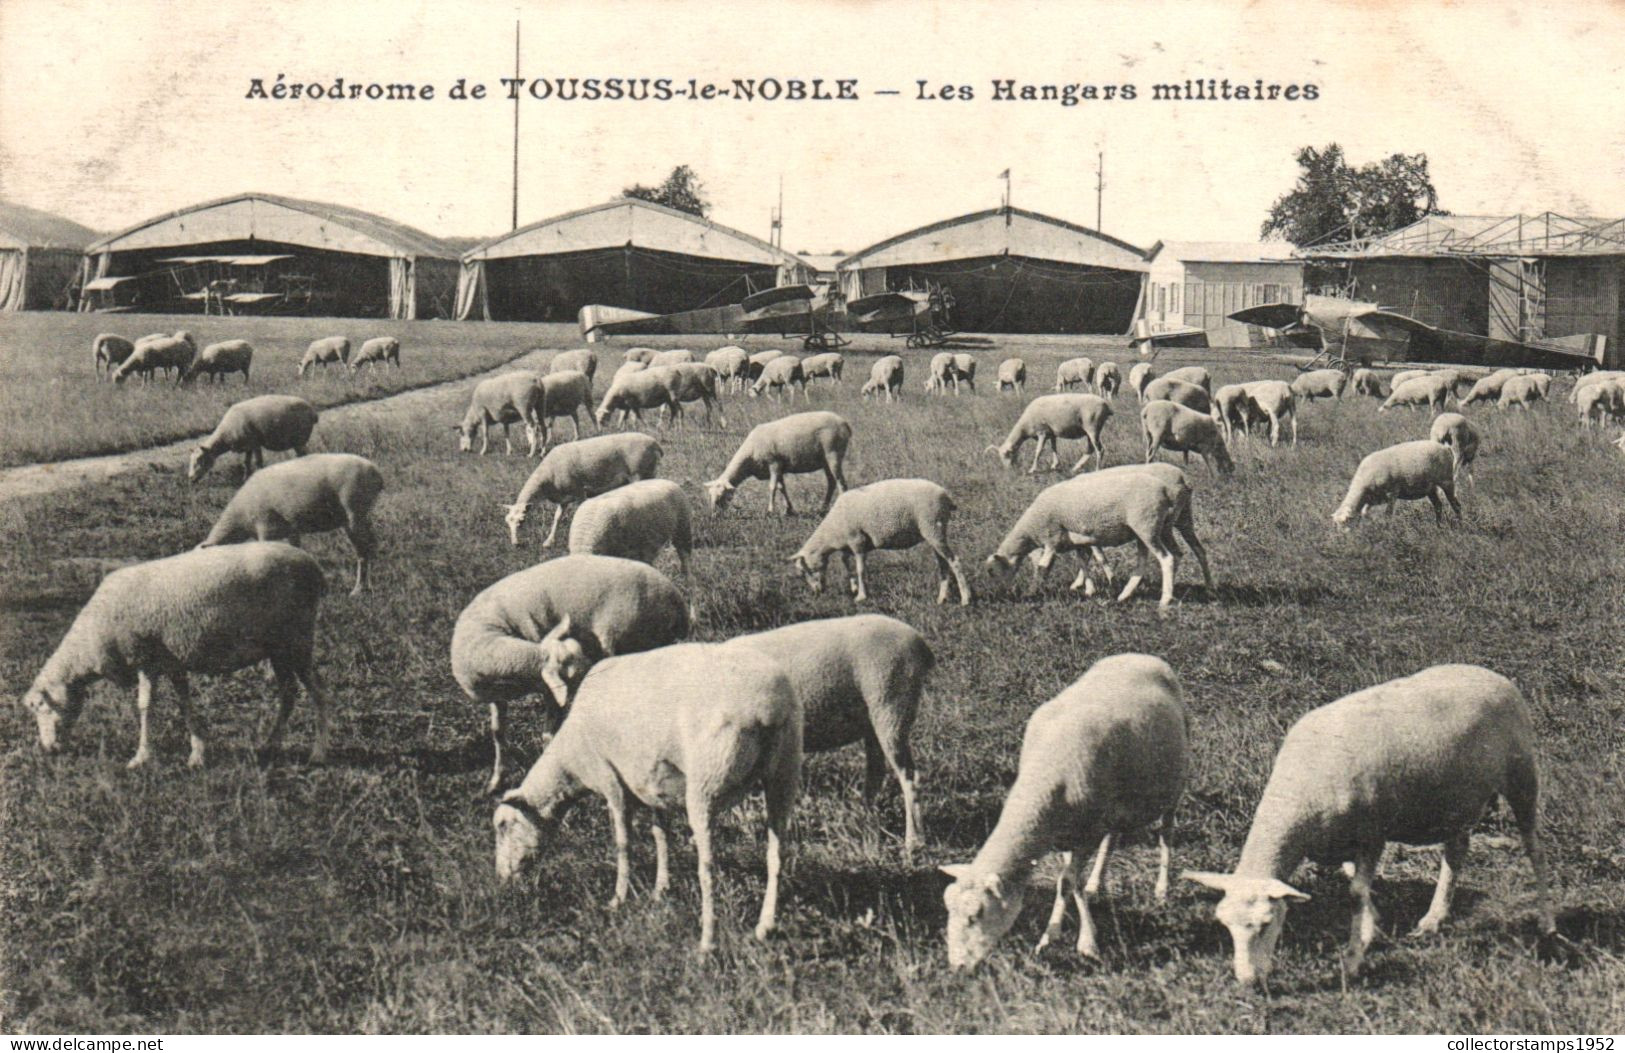 TOUSSUS LE NOBLE, AERODROME, MILITARY HANGARS, SHEEP, FRANCE - Toussus Le Noble